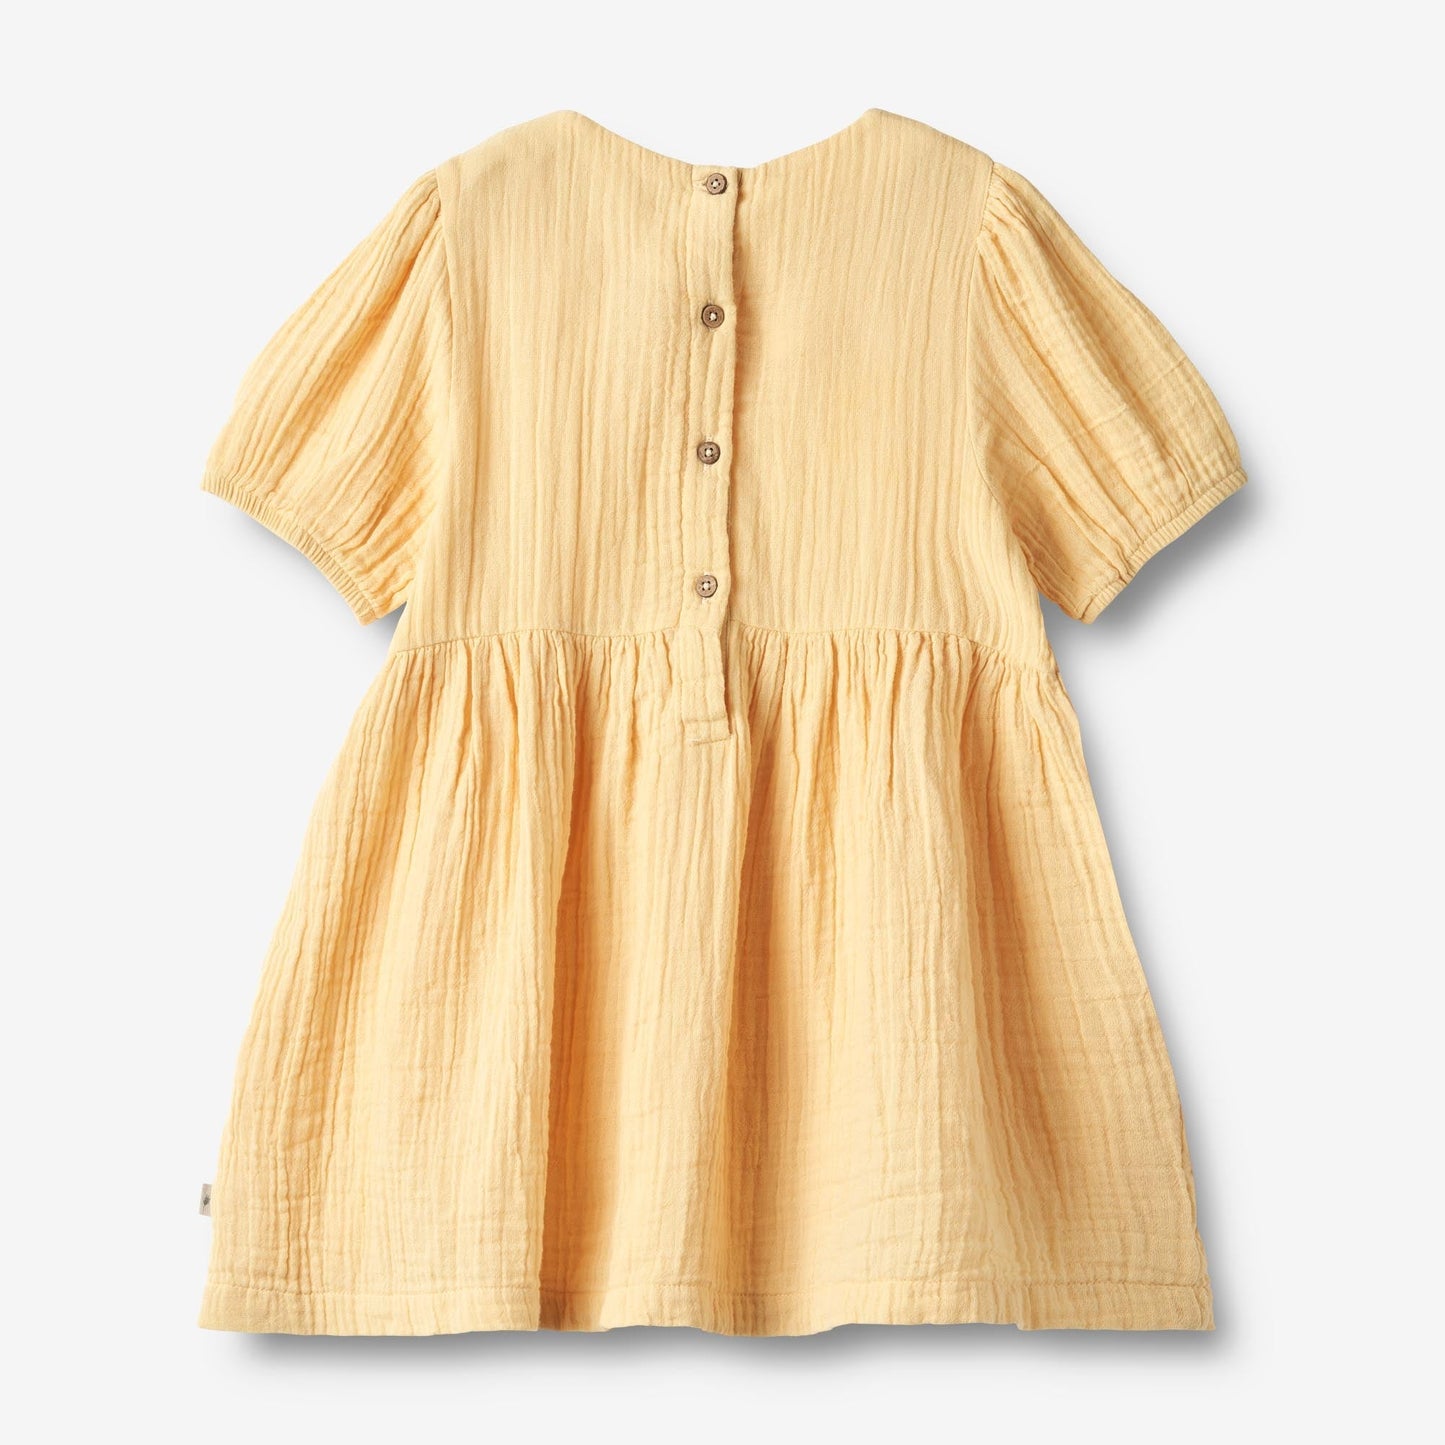 Wheat 'Imelda' S/S Children's Dress - Pale Apricot